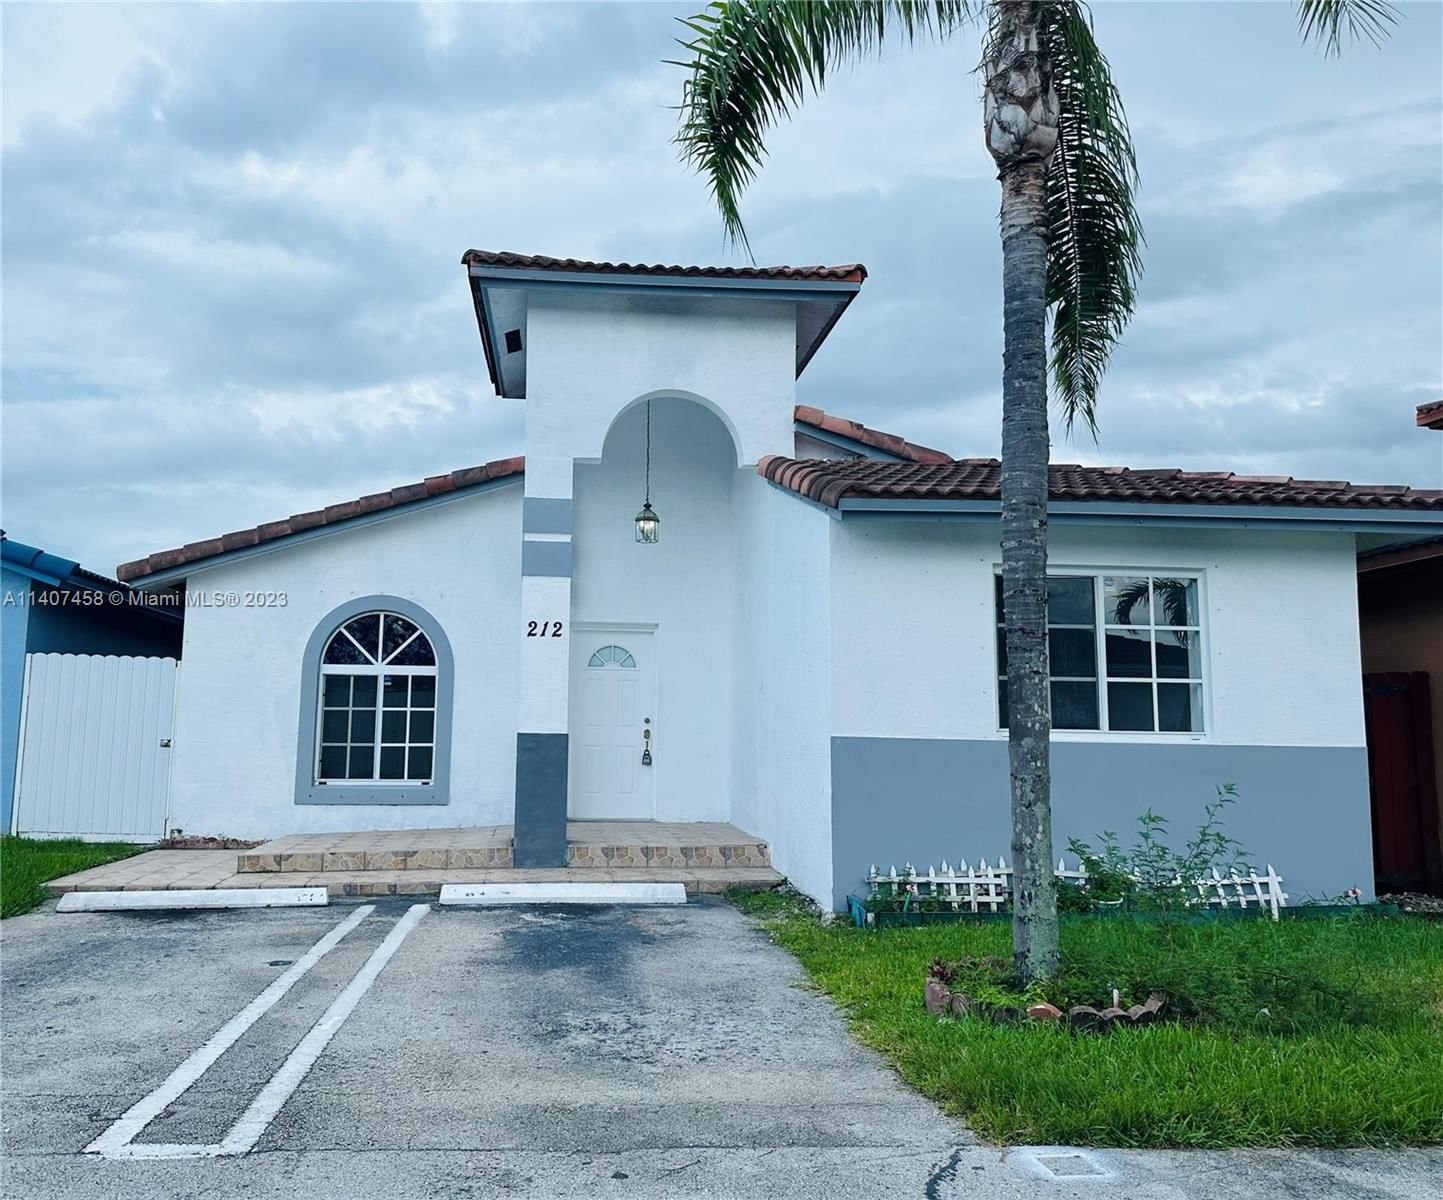 Real estate property located at 7001 35th Ave #212, Miami-Dade County, LOS PALACIOS II CONDO, Hialeah, FL